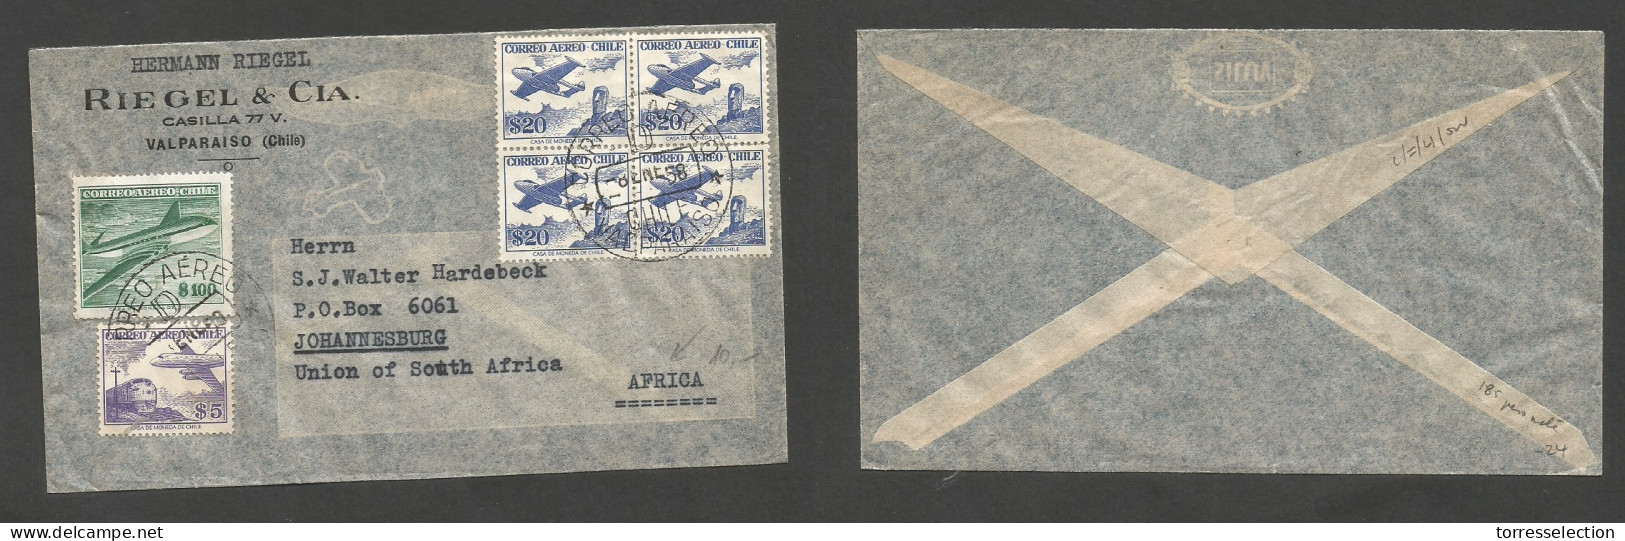 Chile - XX. 1958 (8 Ene) Valp - South Africa, Joburg. Air Multifkd Env At 185 Pesos Rate. Fine + Dest. XSALE. - Chile